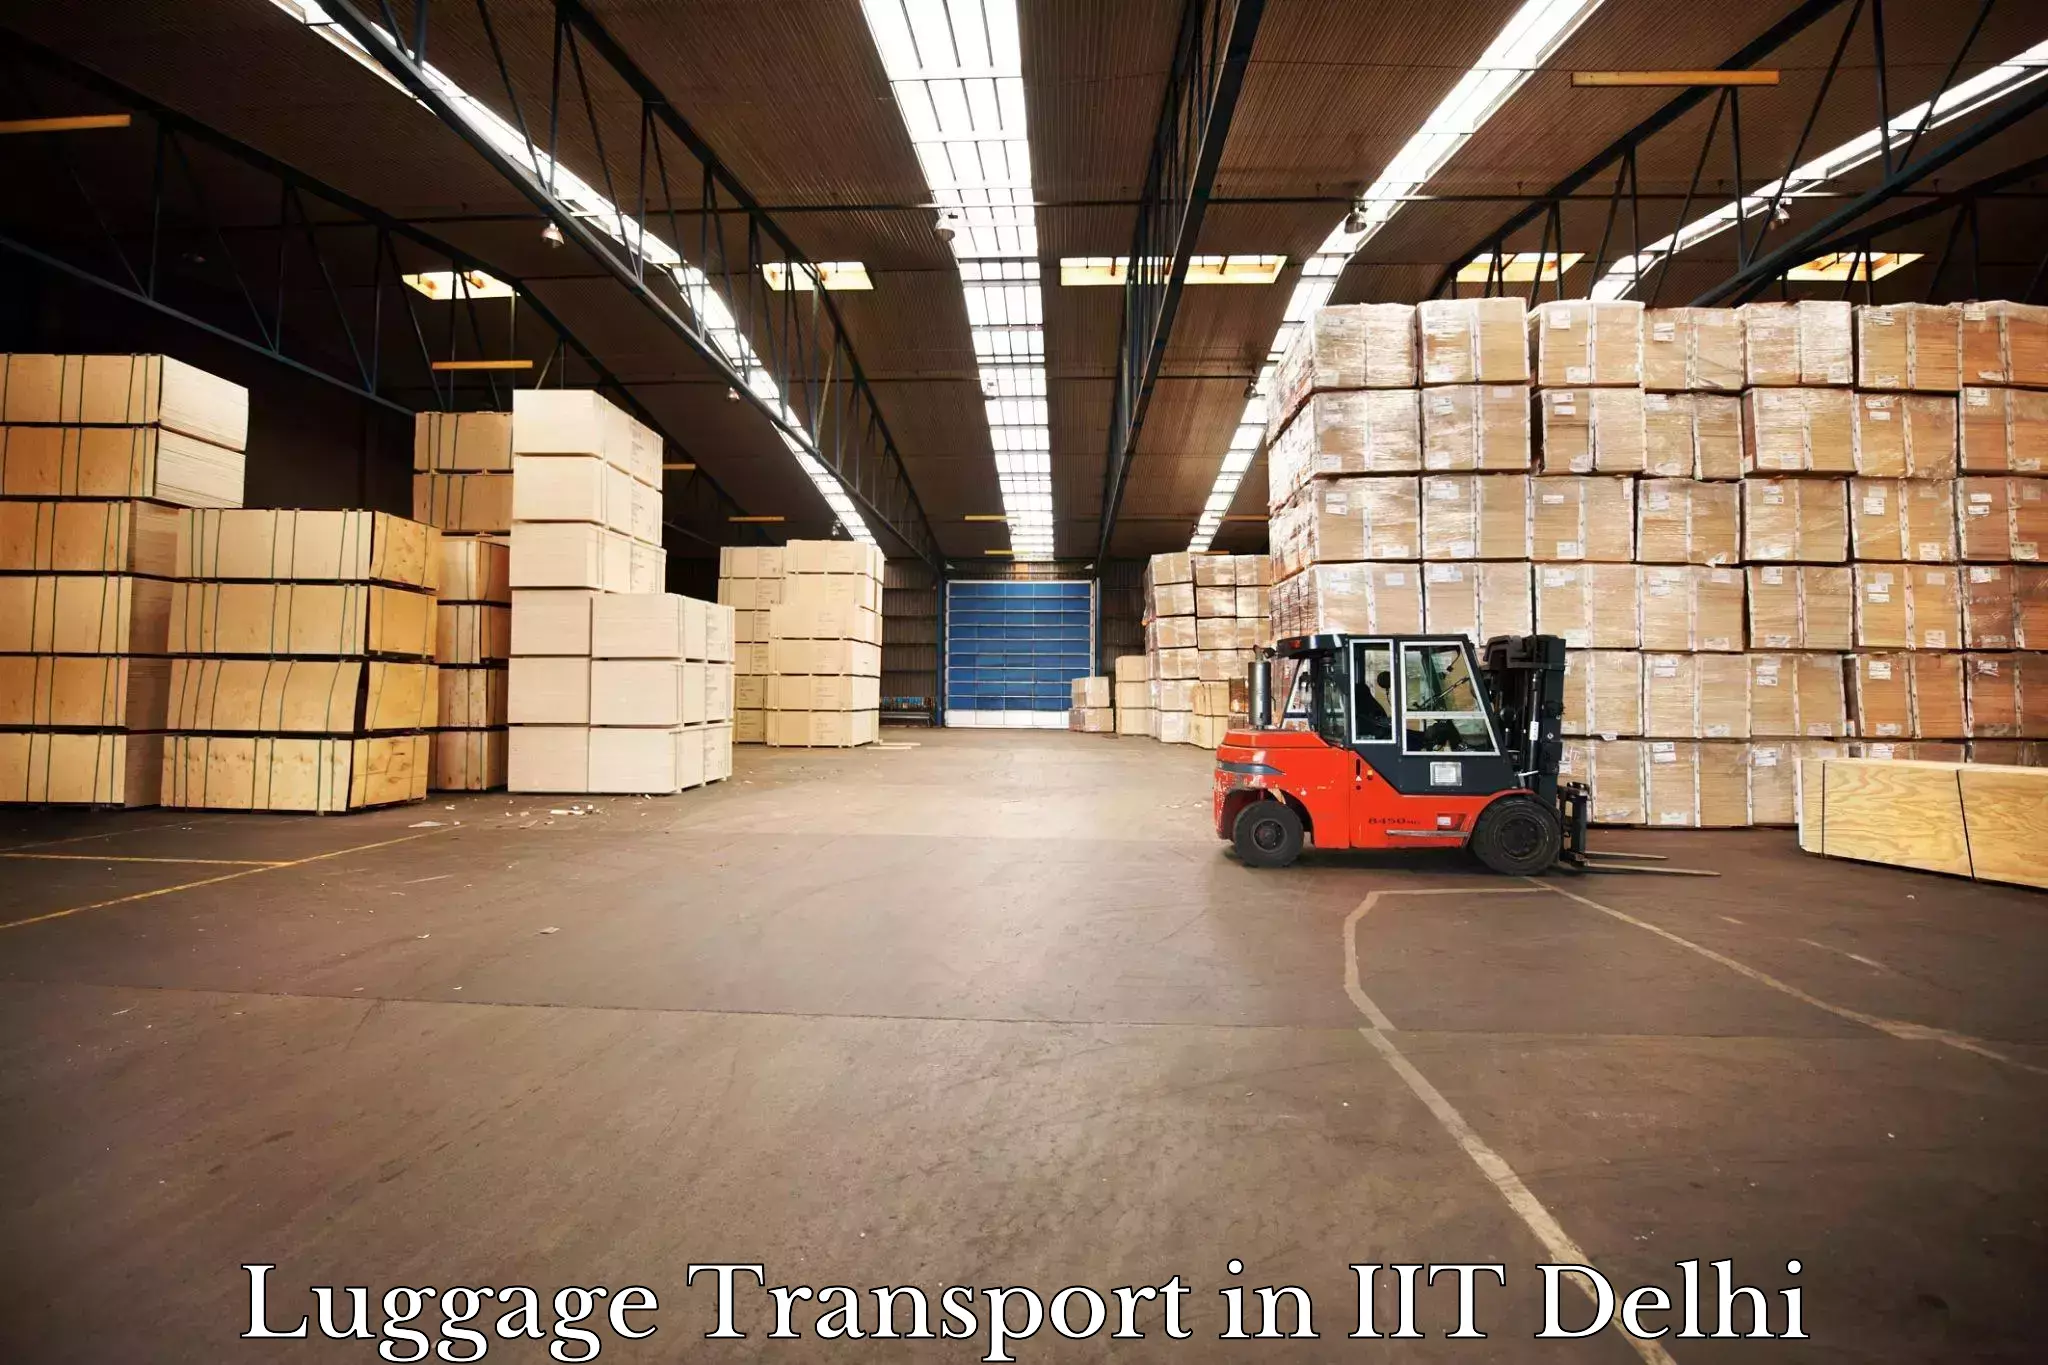 Rural baggage transport in IIT Delhi